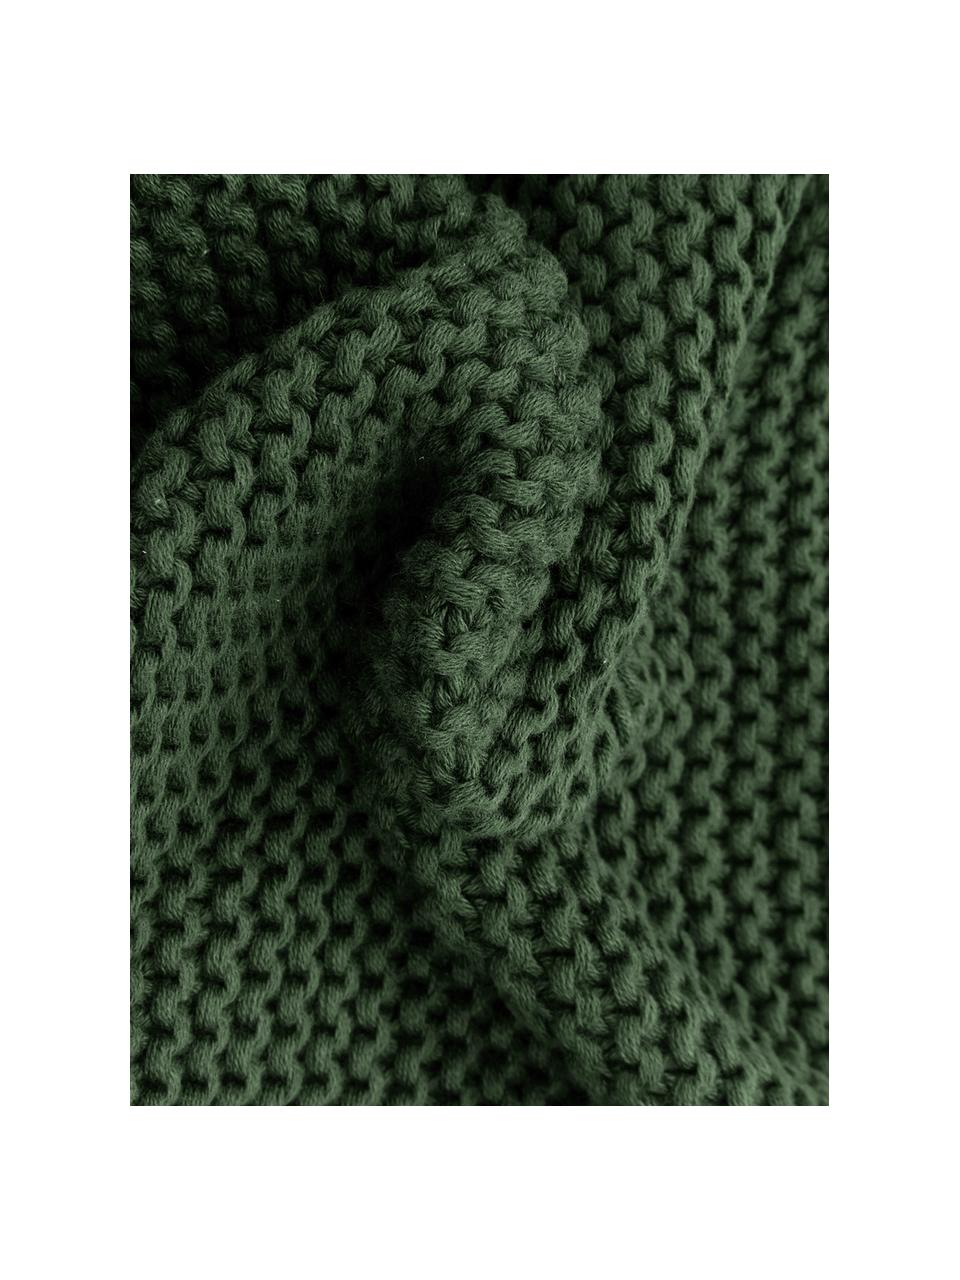 Housse de coussin rectangulaire tricot vert foncé Adalyn, Vert